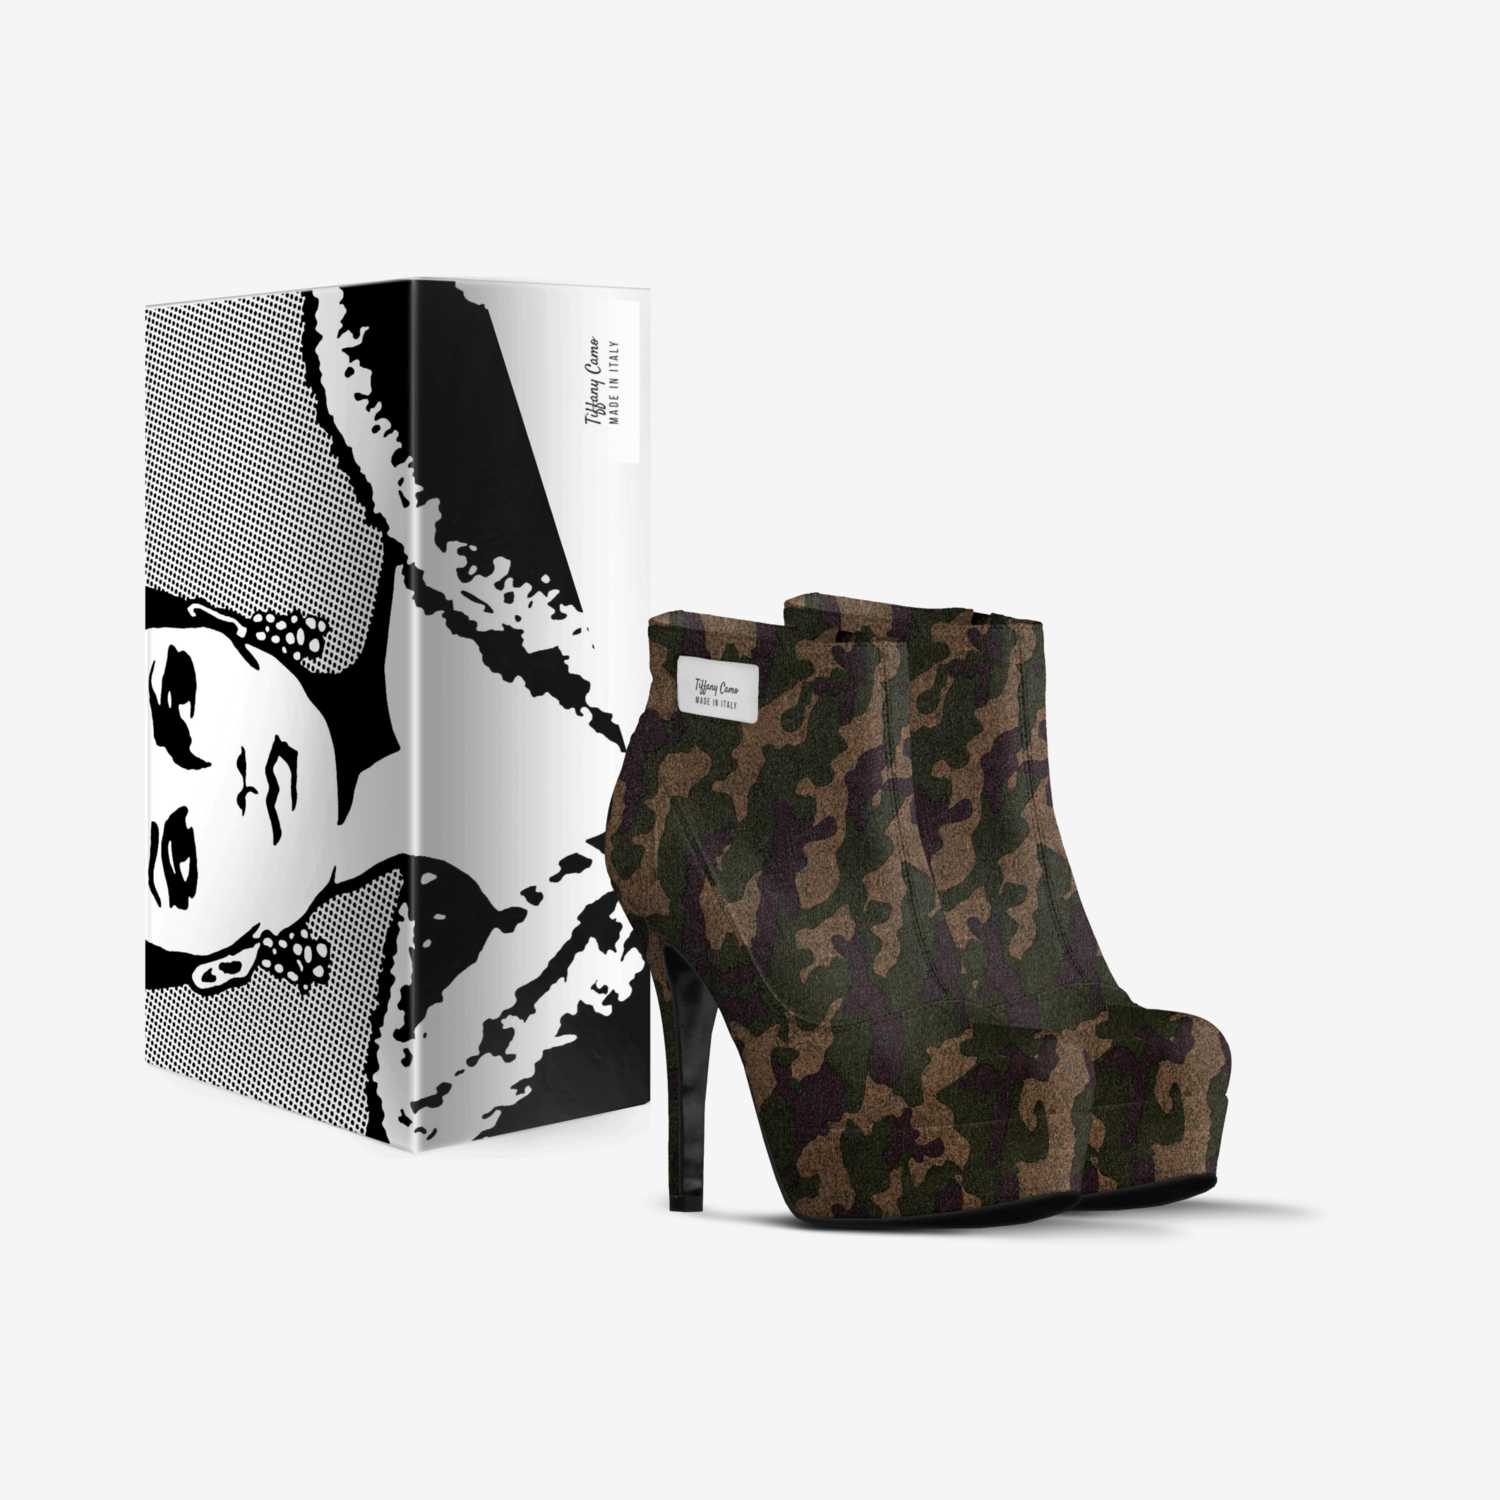 Tiffany Camo custom made in Italy shoes by Tiffany Rochelle Wilson | Box view